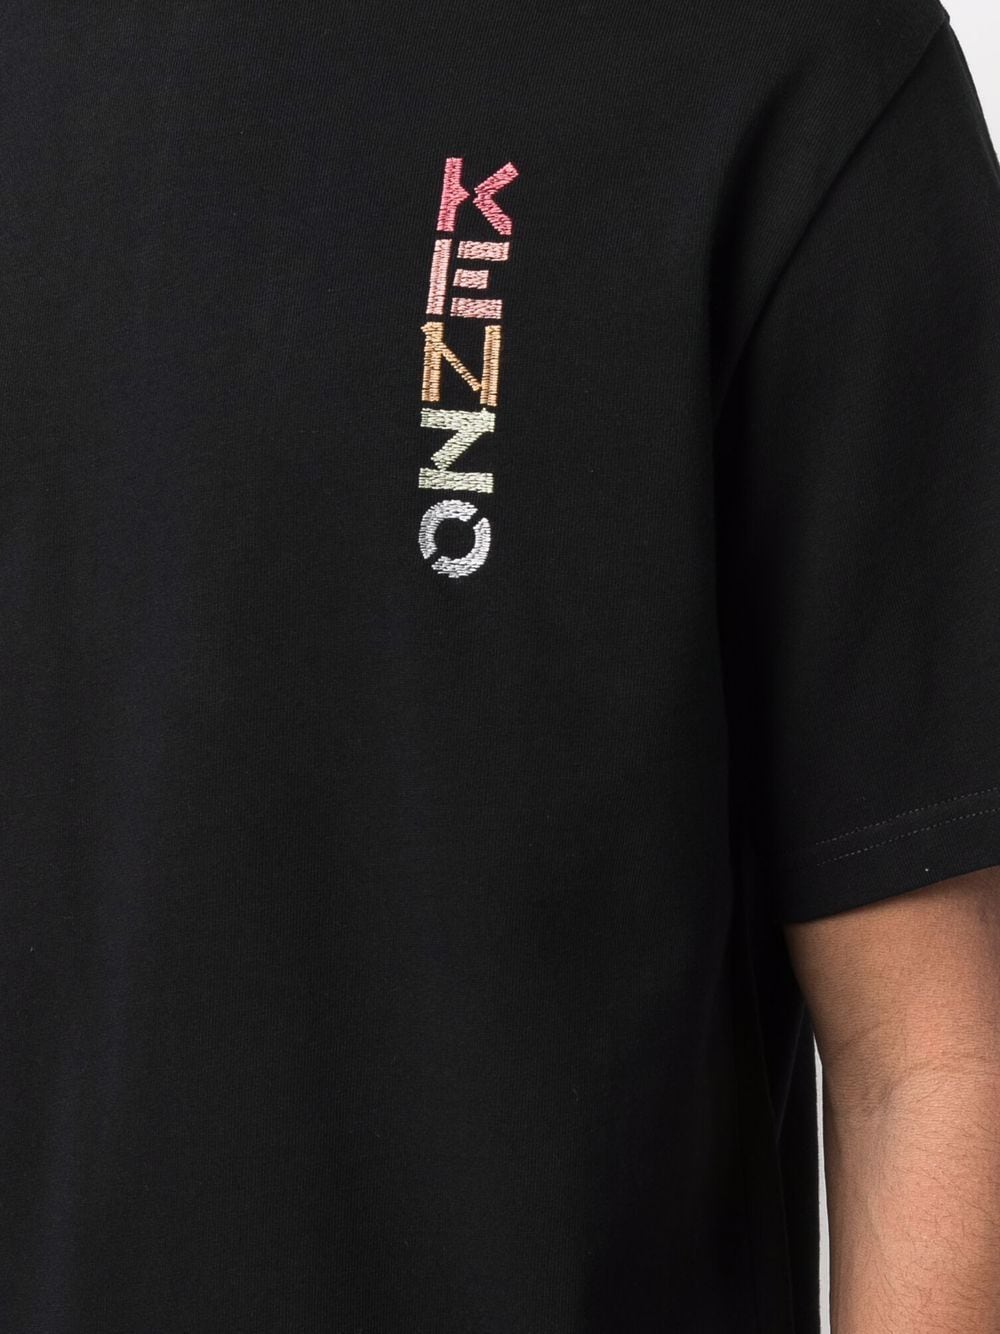 KENZO Logo Embroidered T-Shirt Black - MAISONDEFASHION.COM